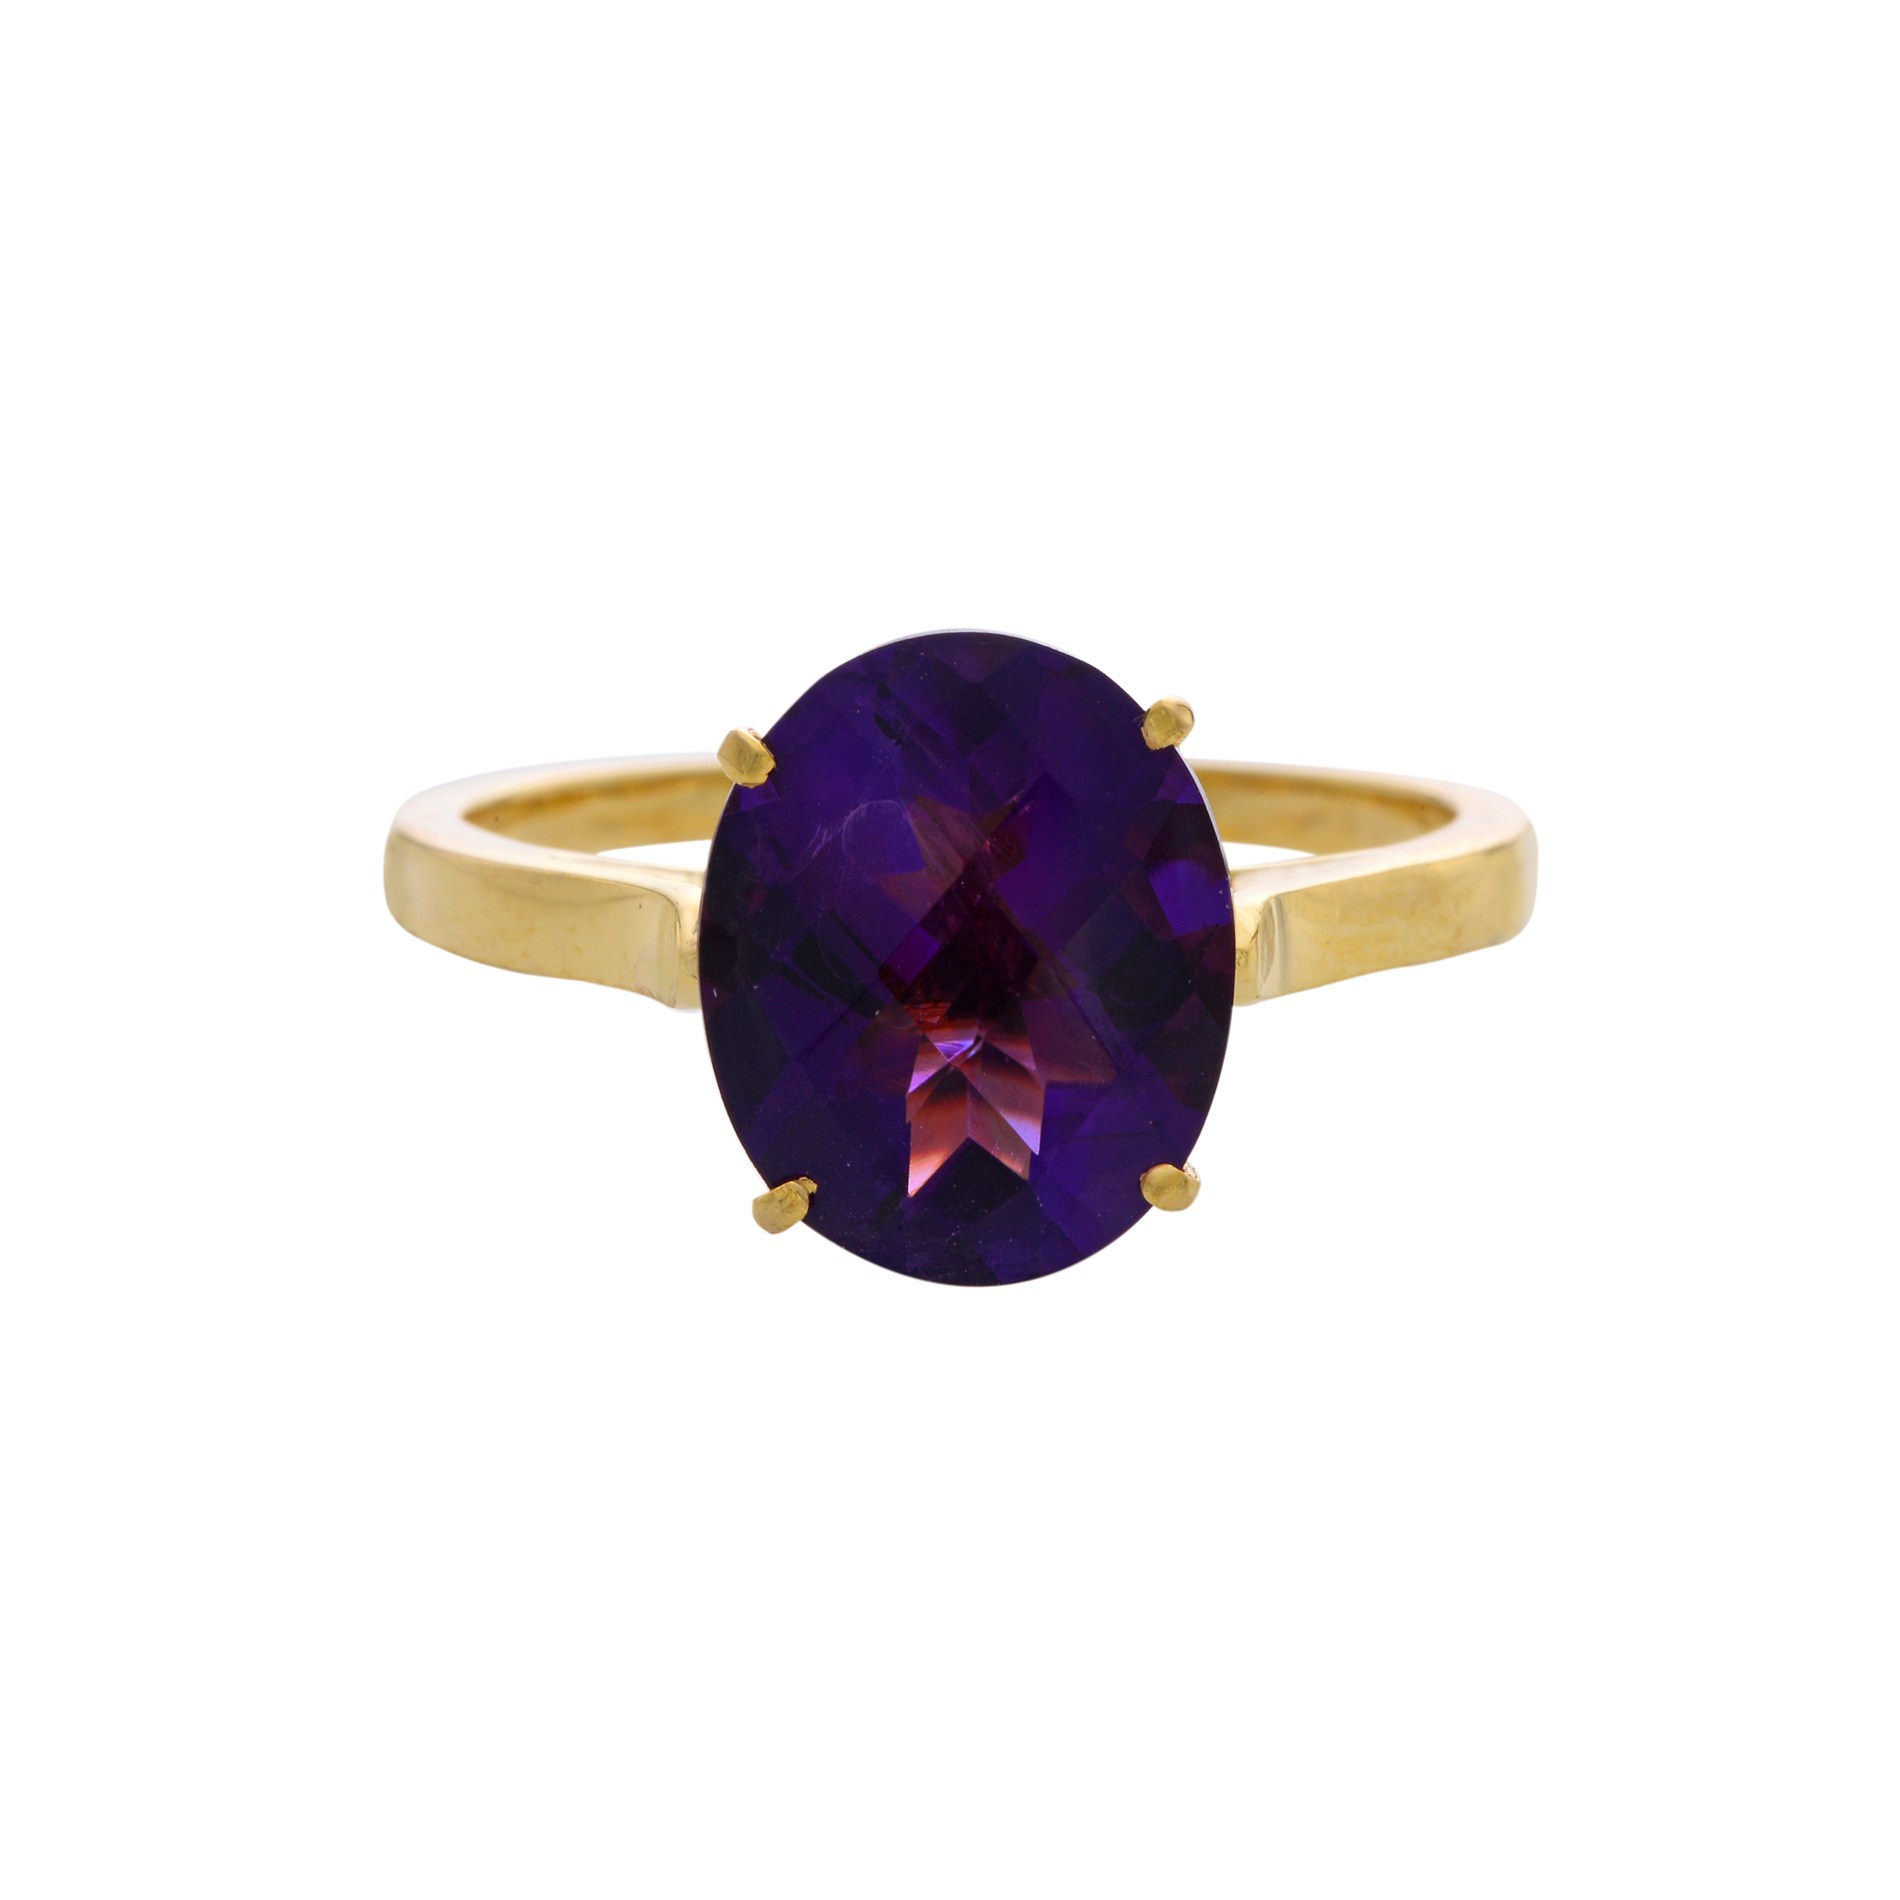 Vintage Amethyst 9ct Gold Ring, Large Rectangle Cut Purple Gemstone, 9k  Circa 1960s. - Addy's Vintage